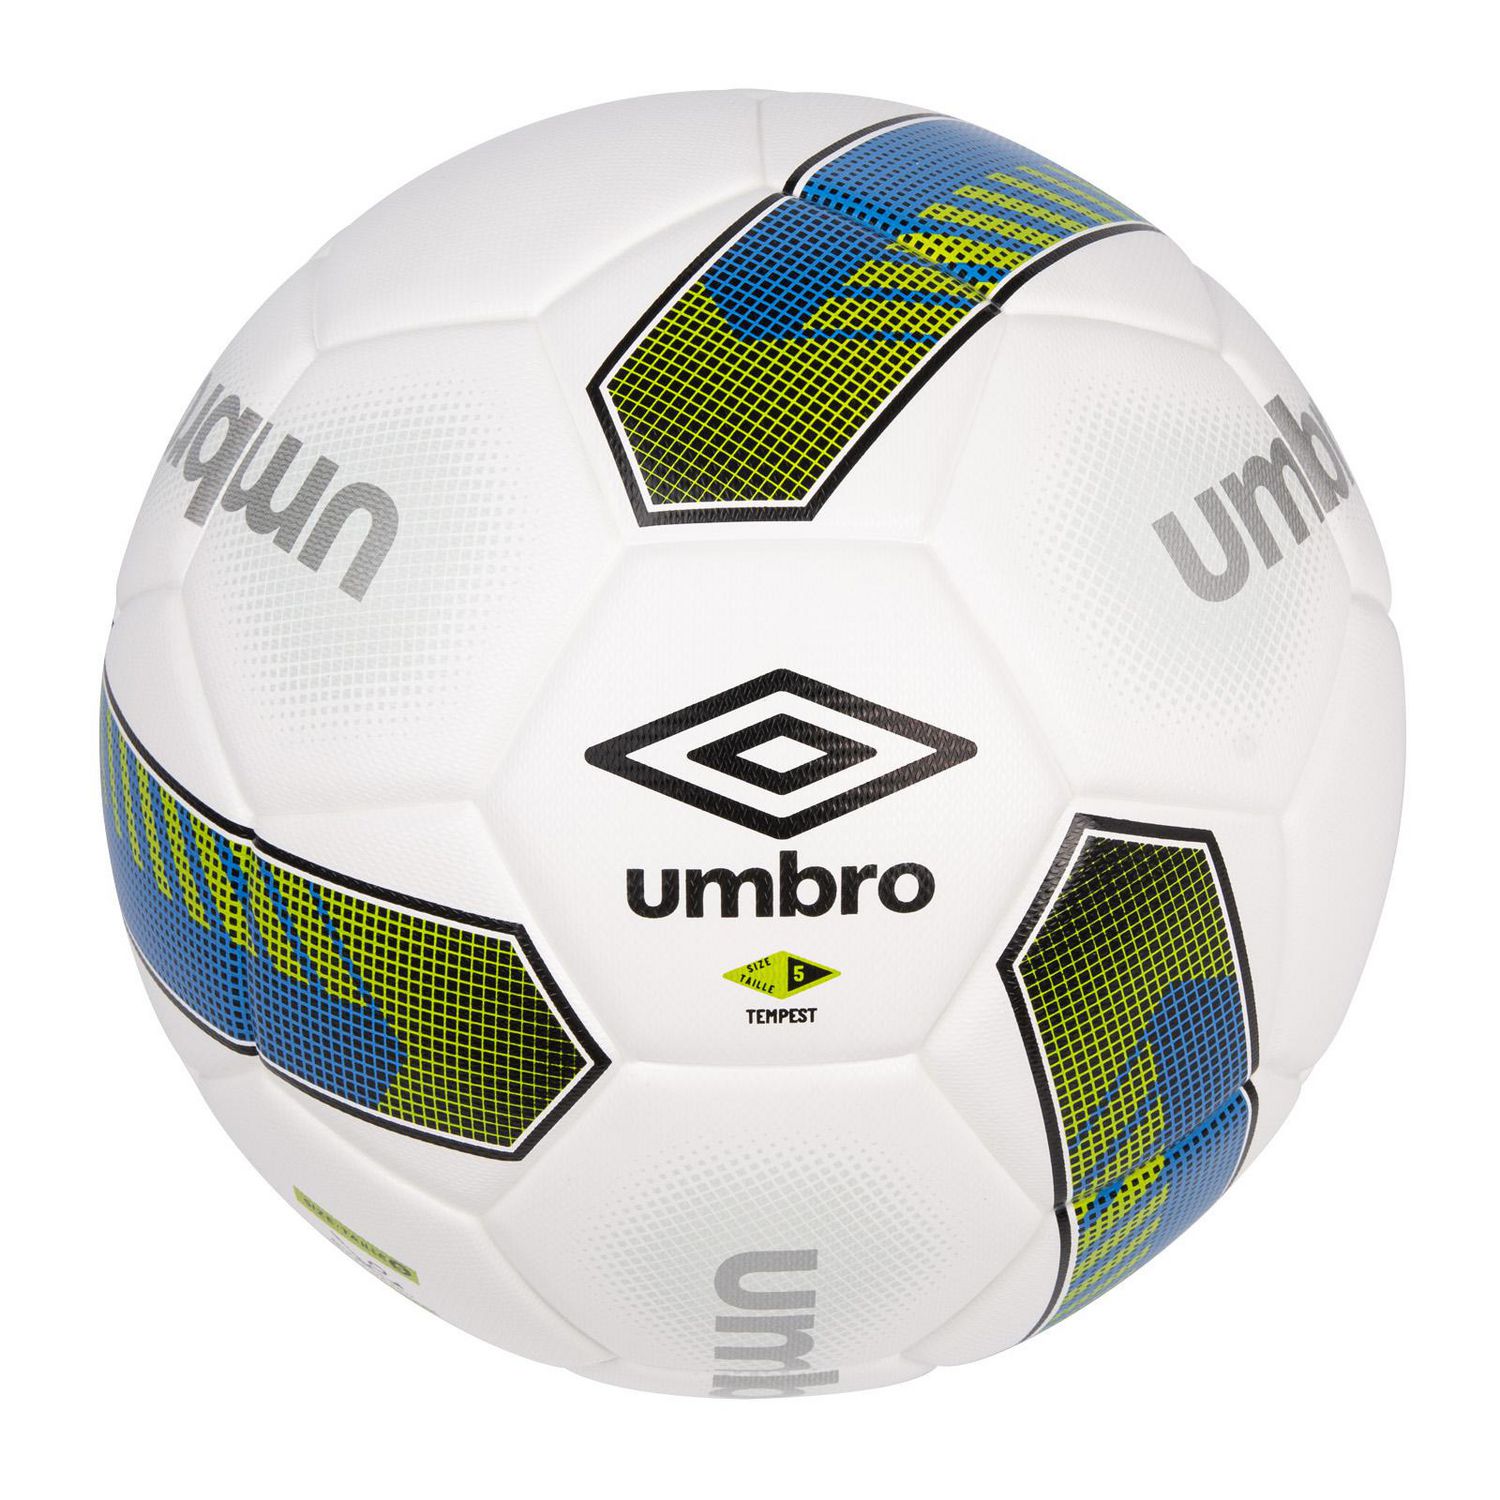 Umbro Tempest Soccer Ball - Size 5, Size 5 - Walmart.ca